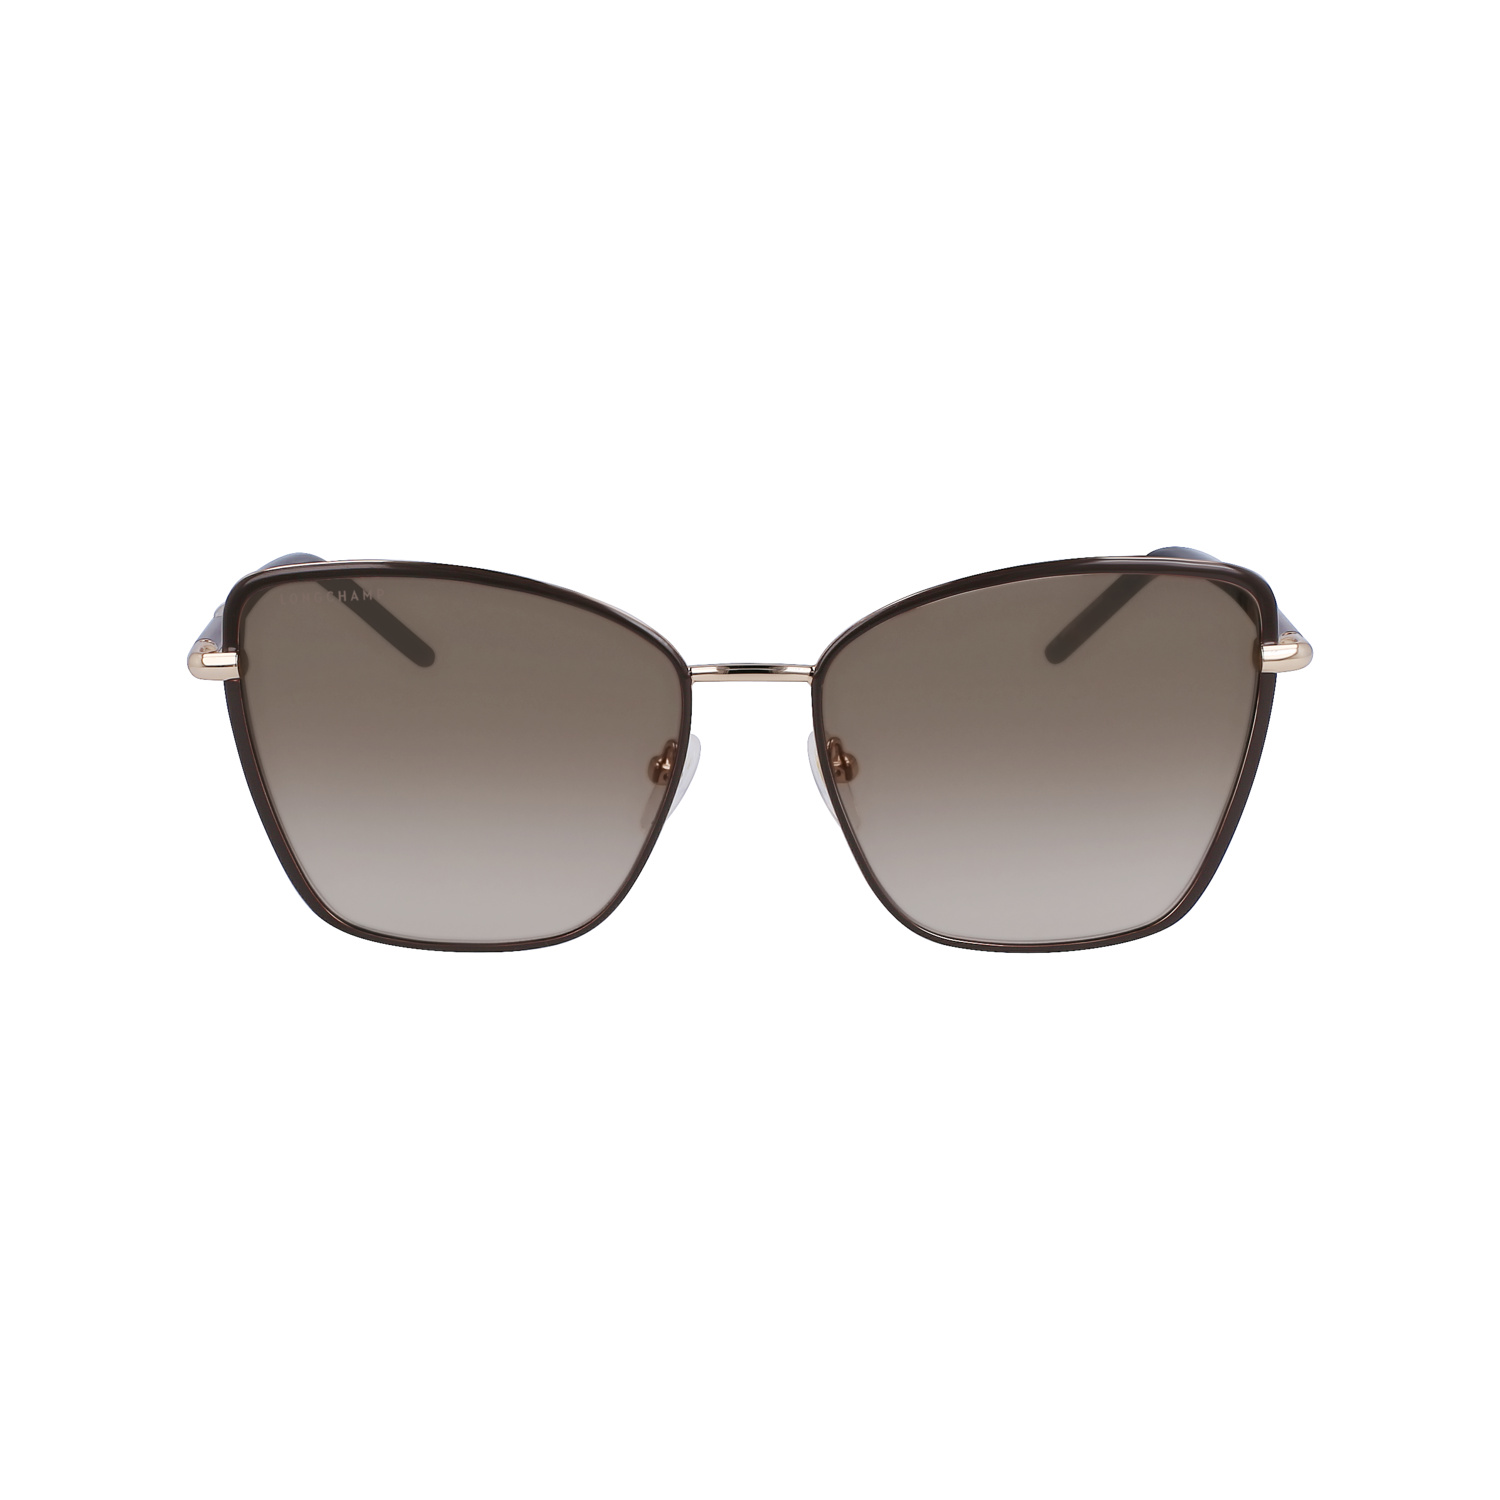 Longchamp Sunglasses In Brown/khaki